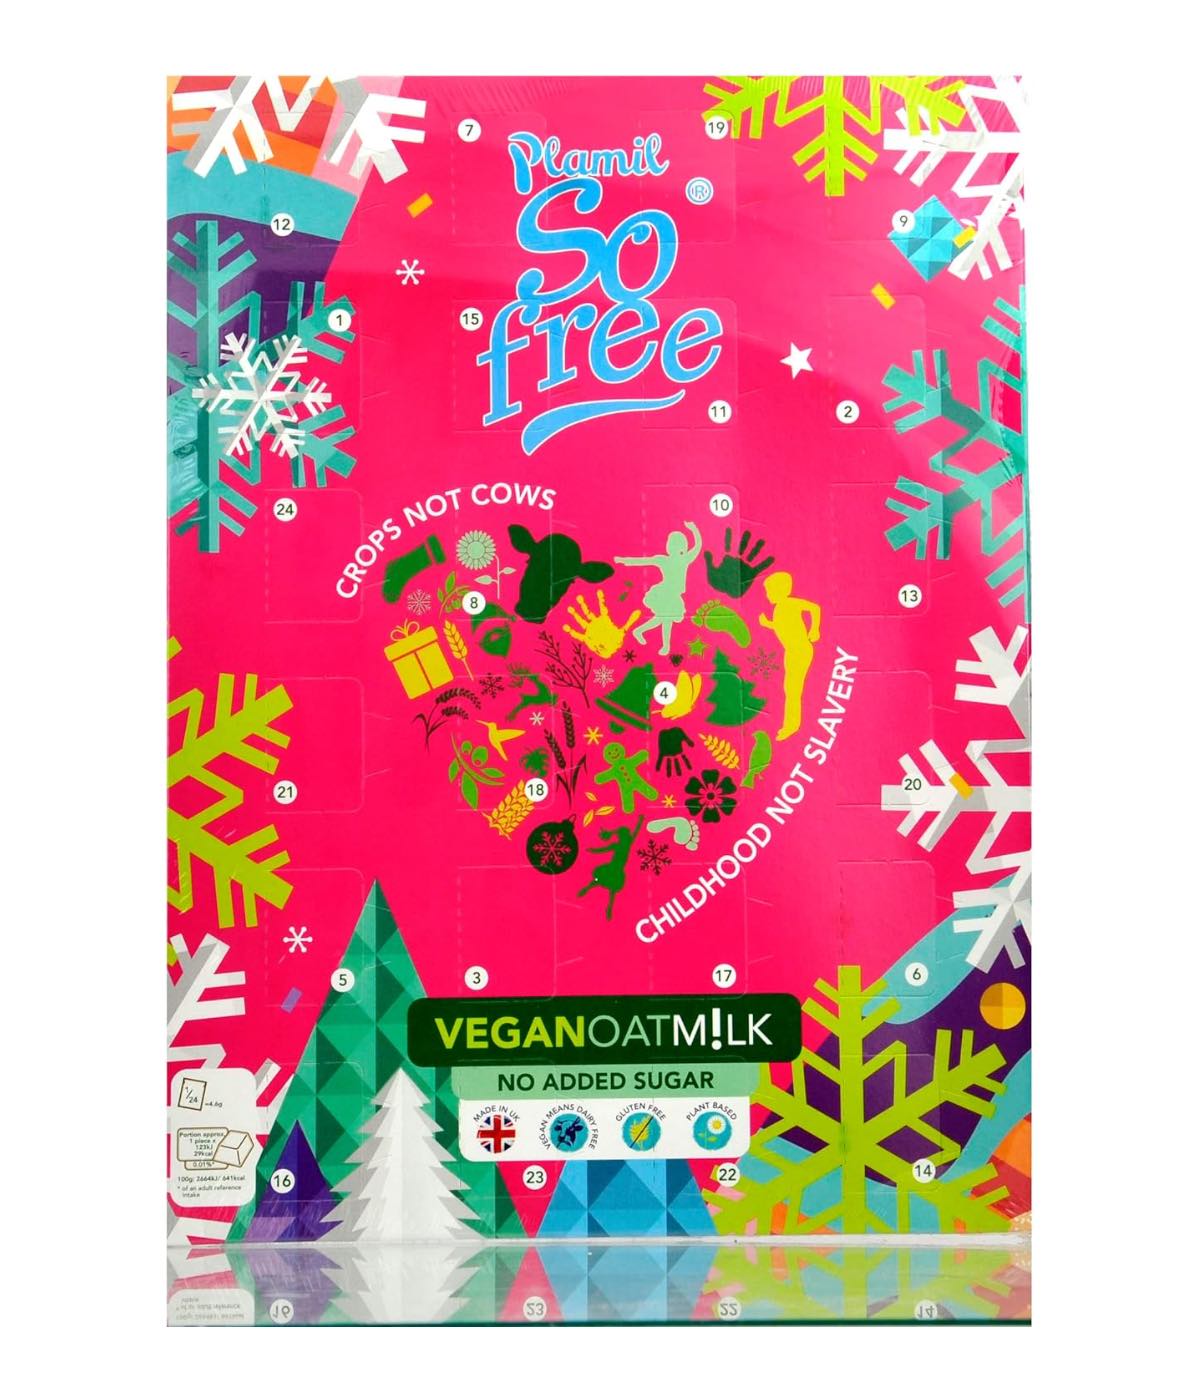 Oatmilk vegan advent calendar in a pink box from Plamil.